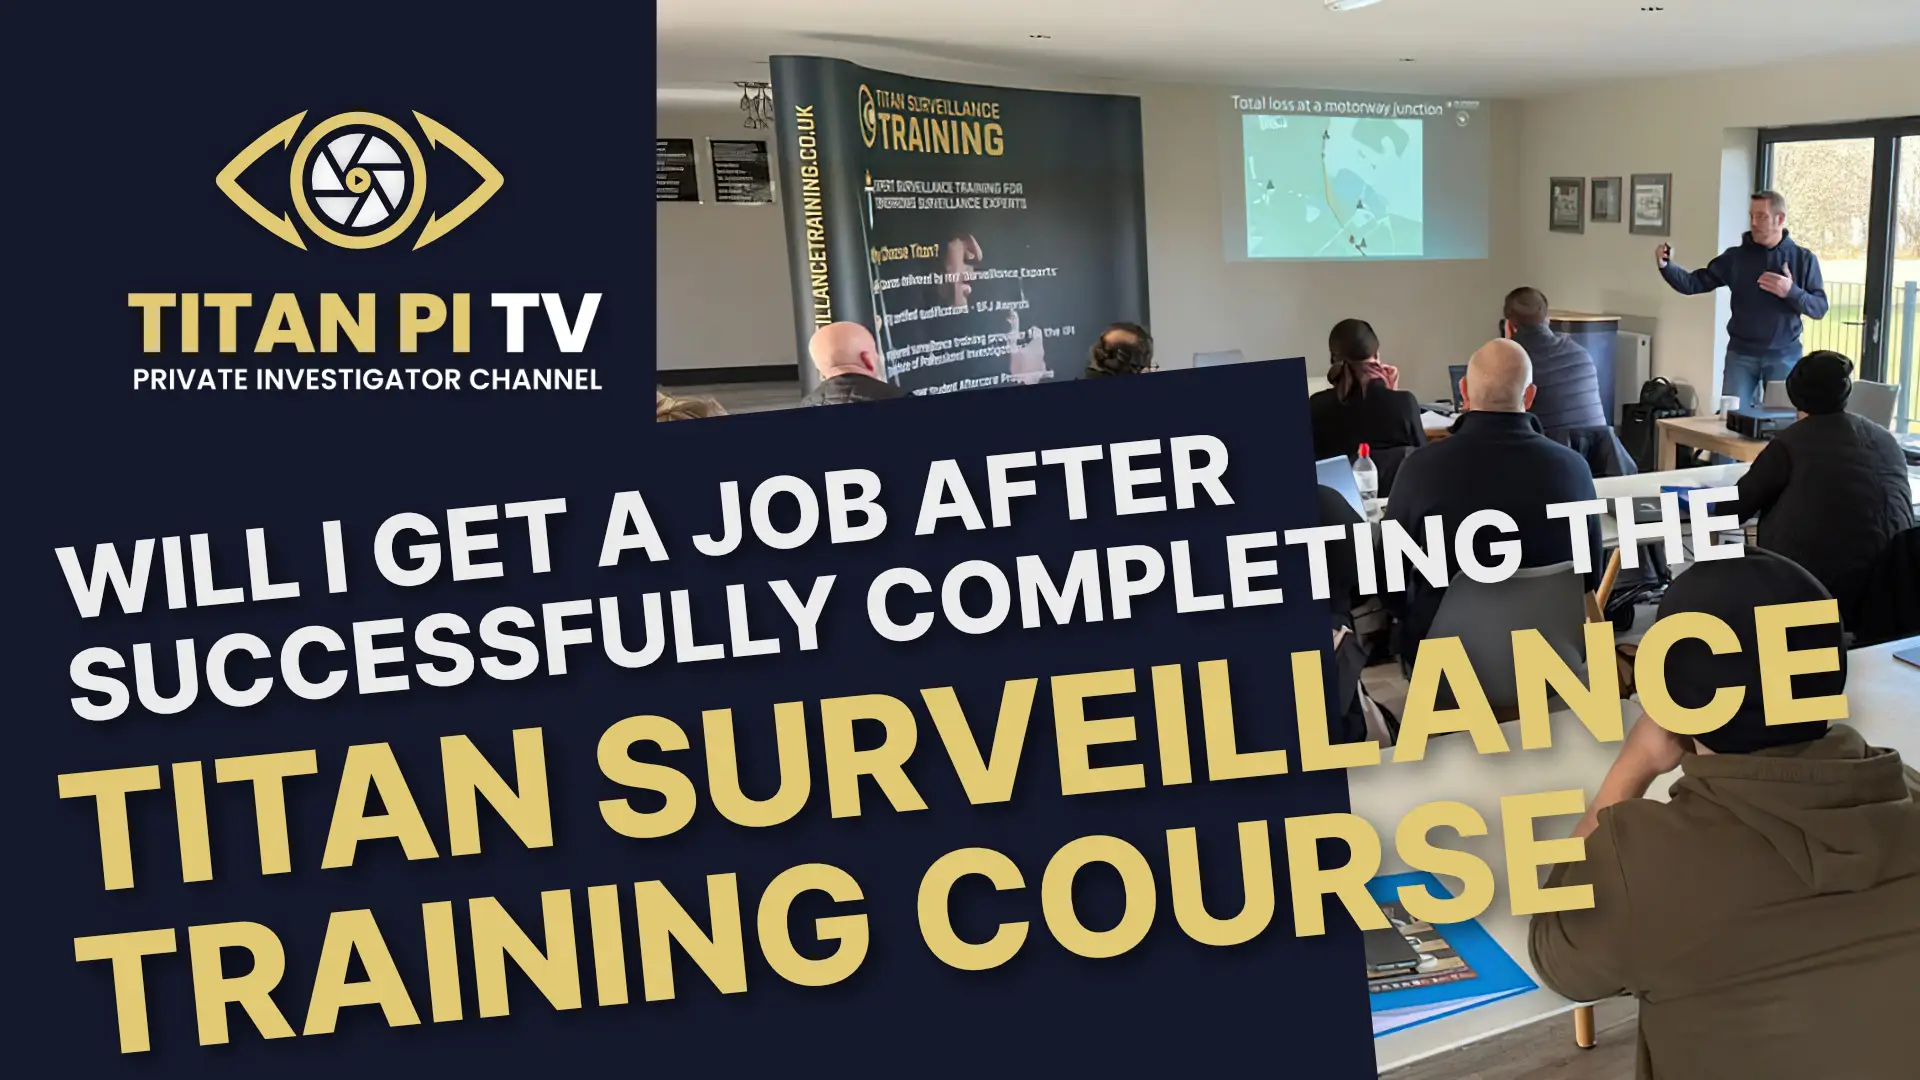 Will I get a job if I successfully complete your Titan surveillance training course?- E19 -Titan PI TV